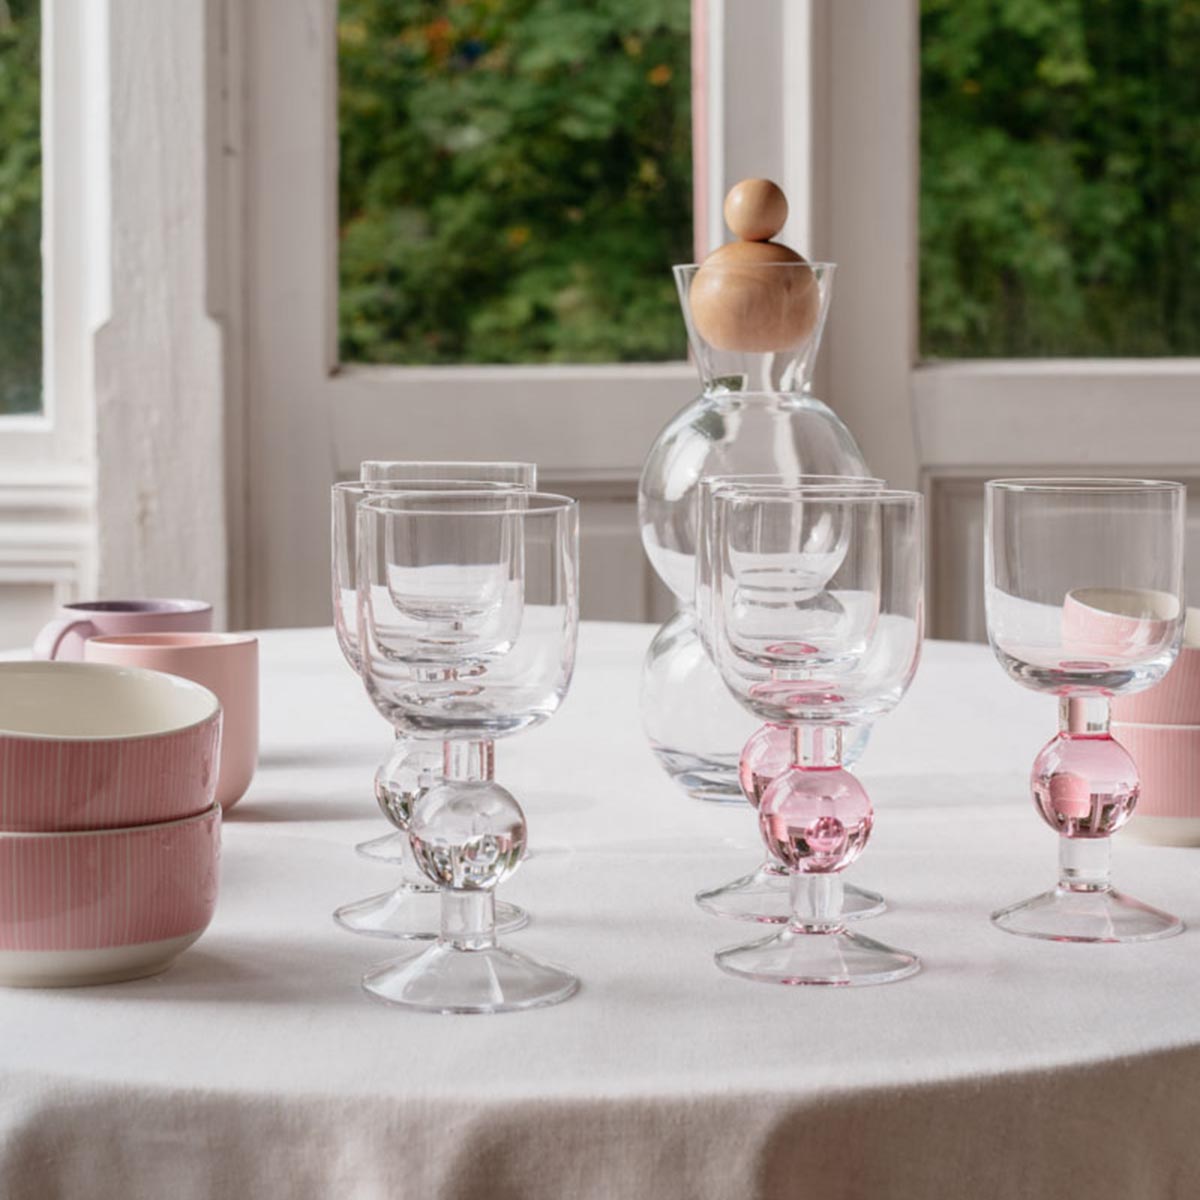 Kupla wine glass, pink, 30 cl, 2 pcs